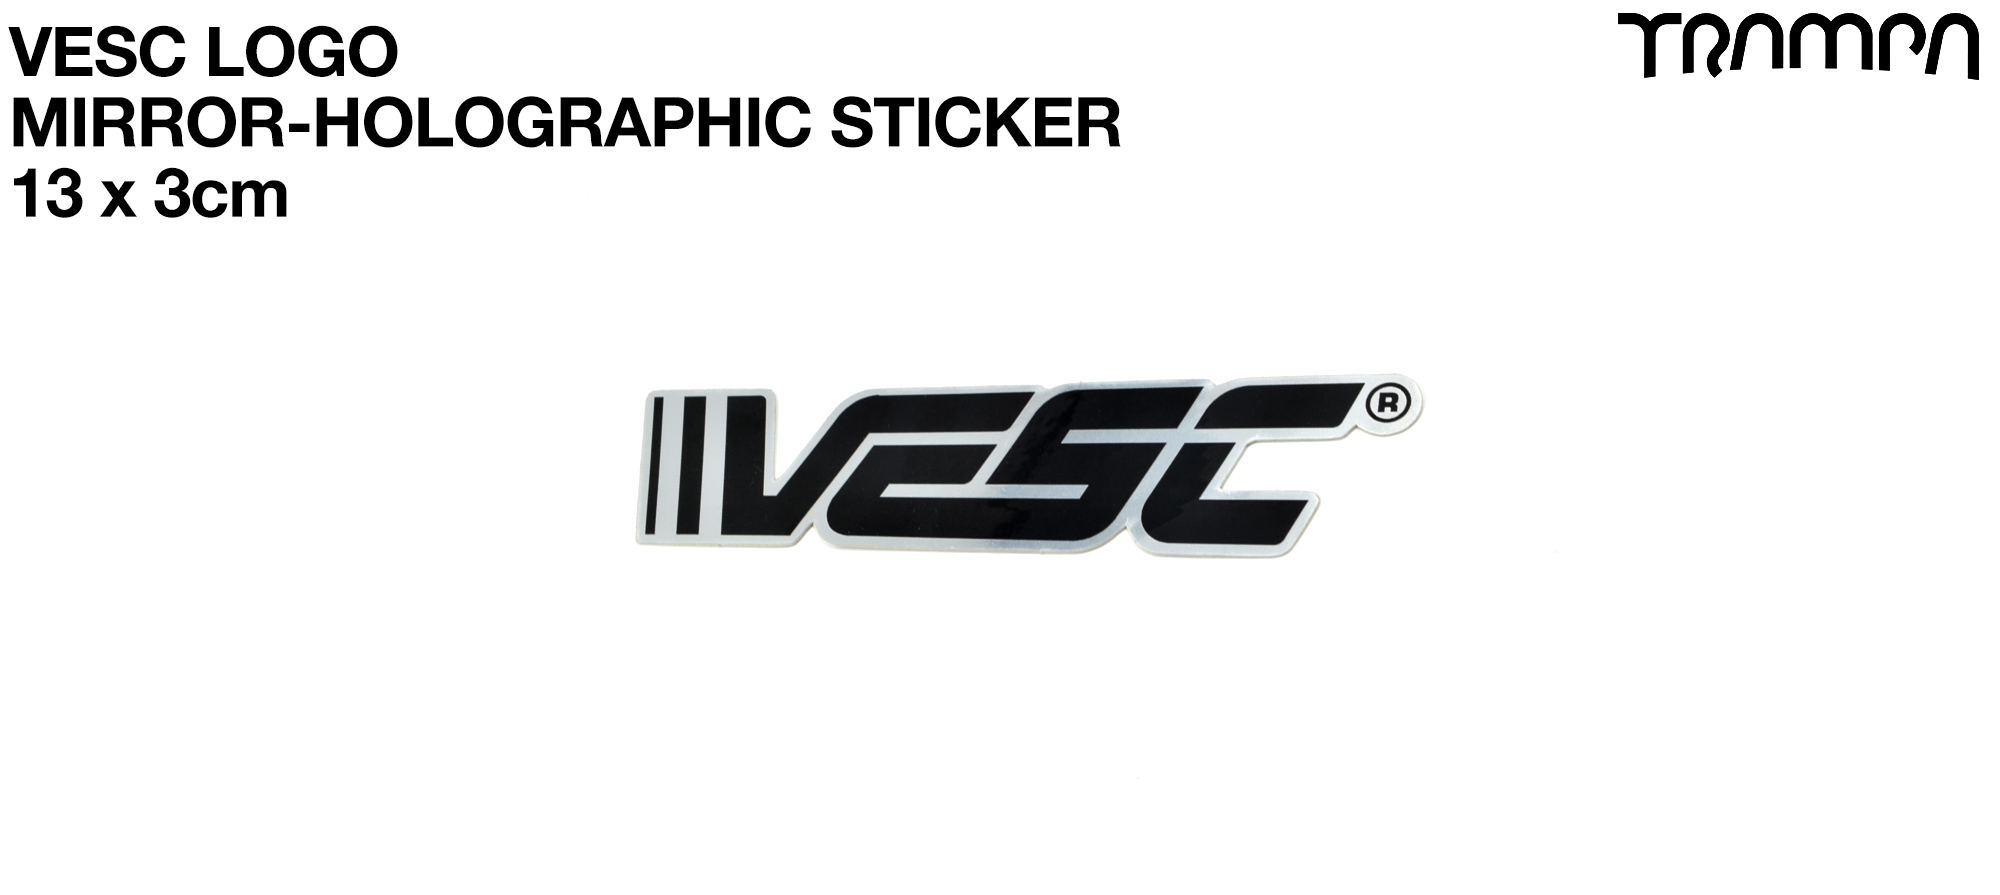 Please give me a Holographic VESC Sticker (+£1)